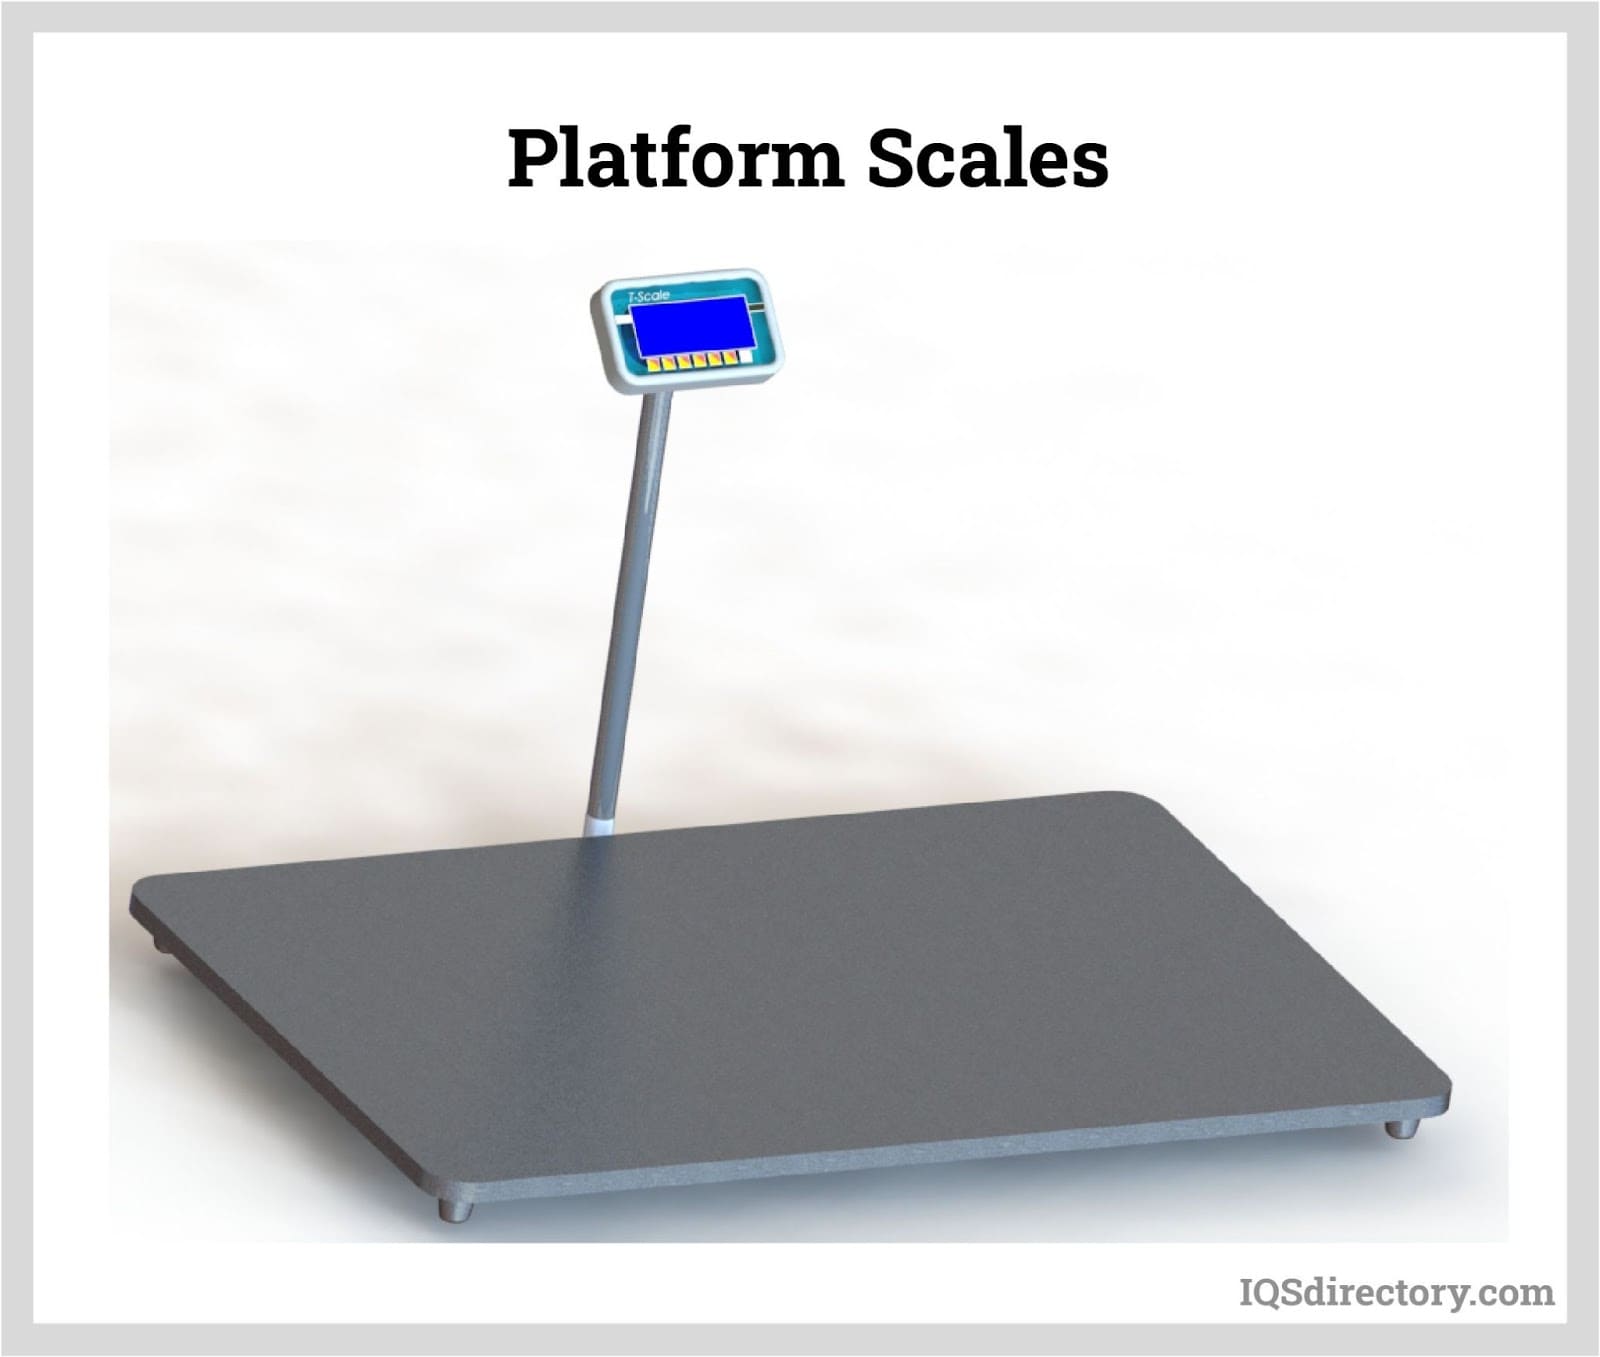 https://www.iqsdirectory.com/articles/scale/platform-scales/platform-scales.jpg